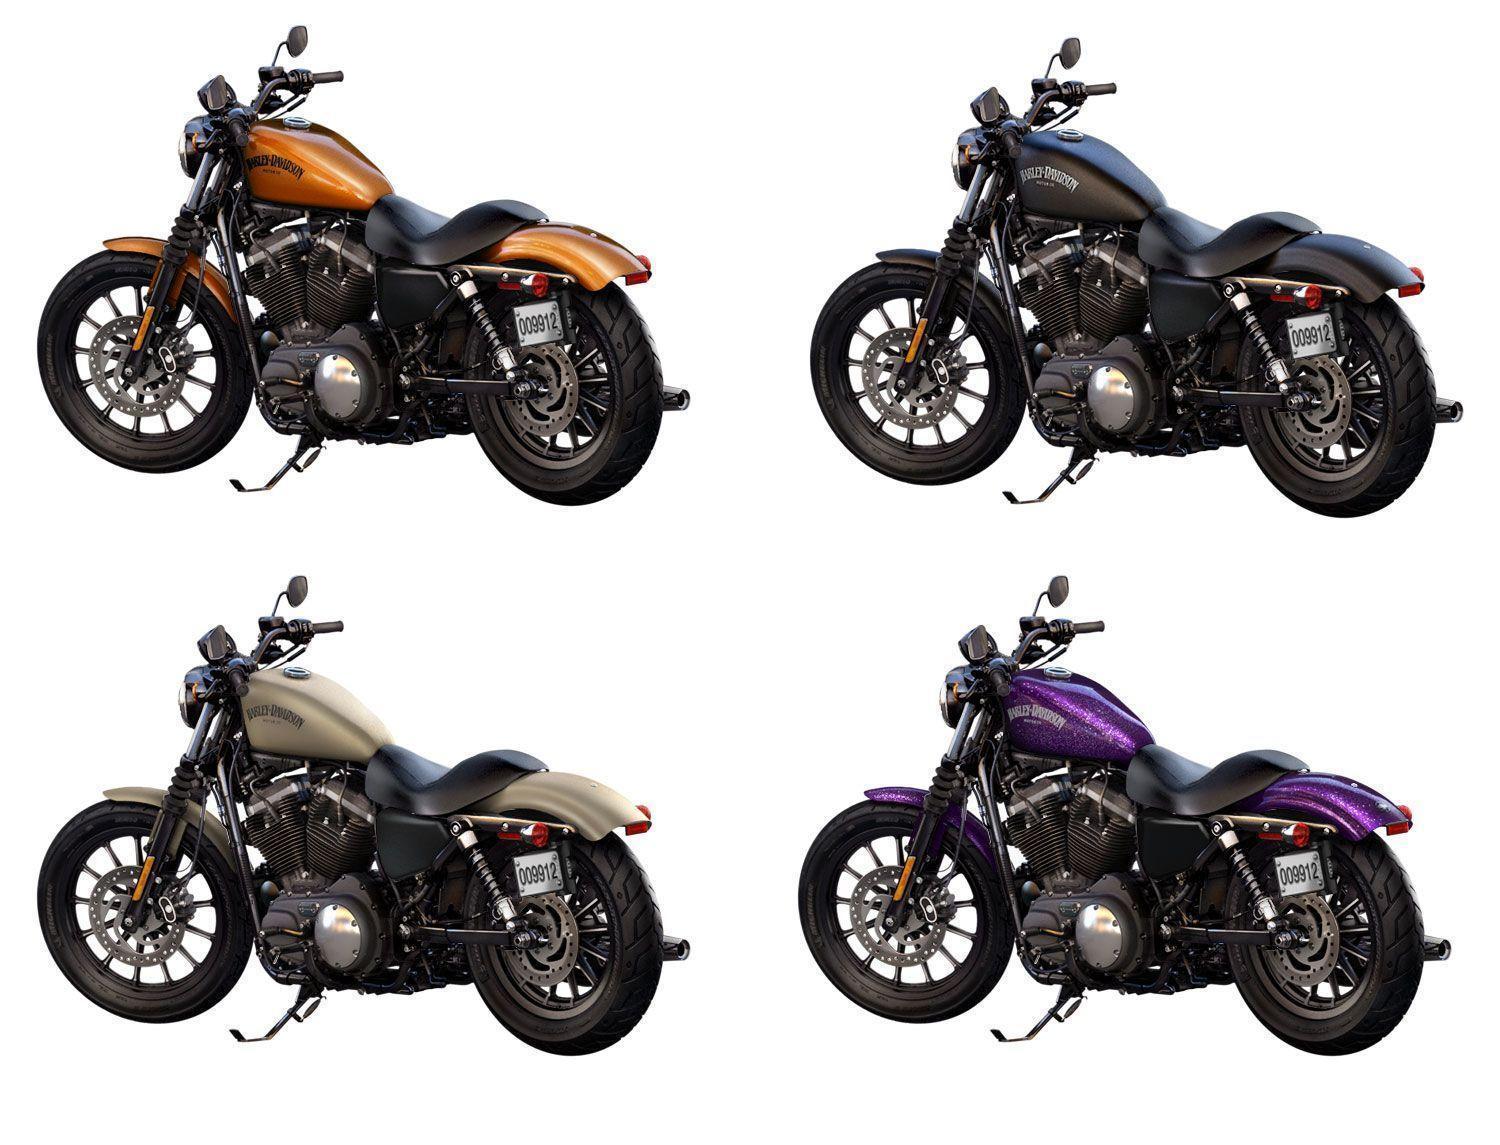 image about Harley Davidson. Harley Davidson